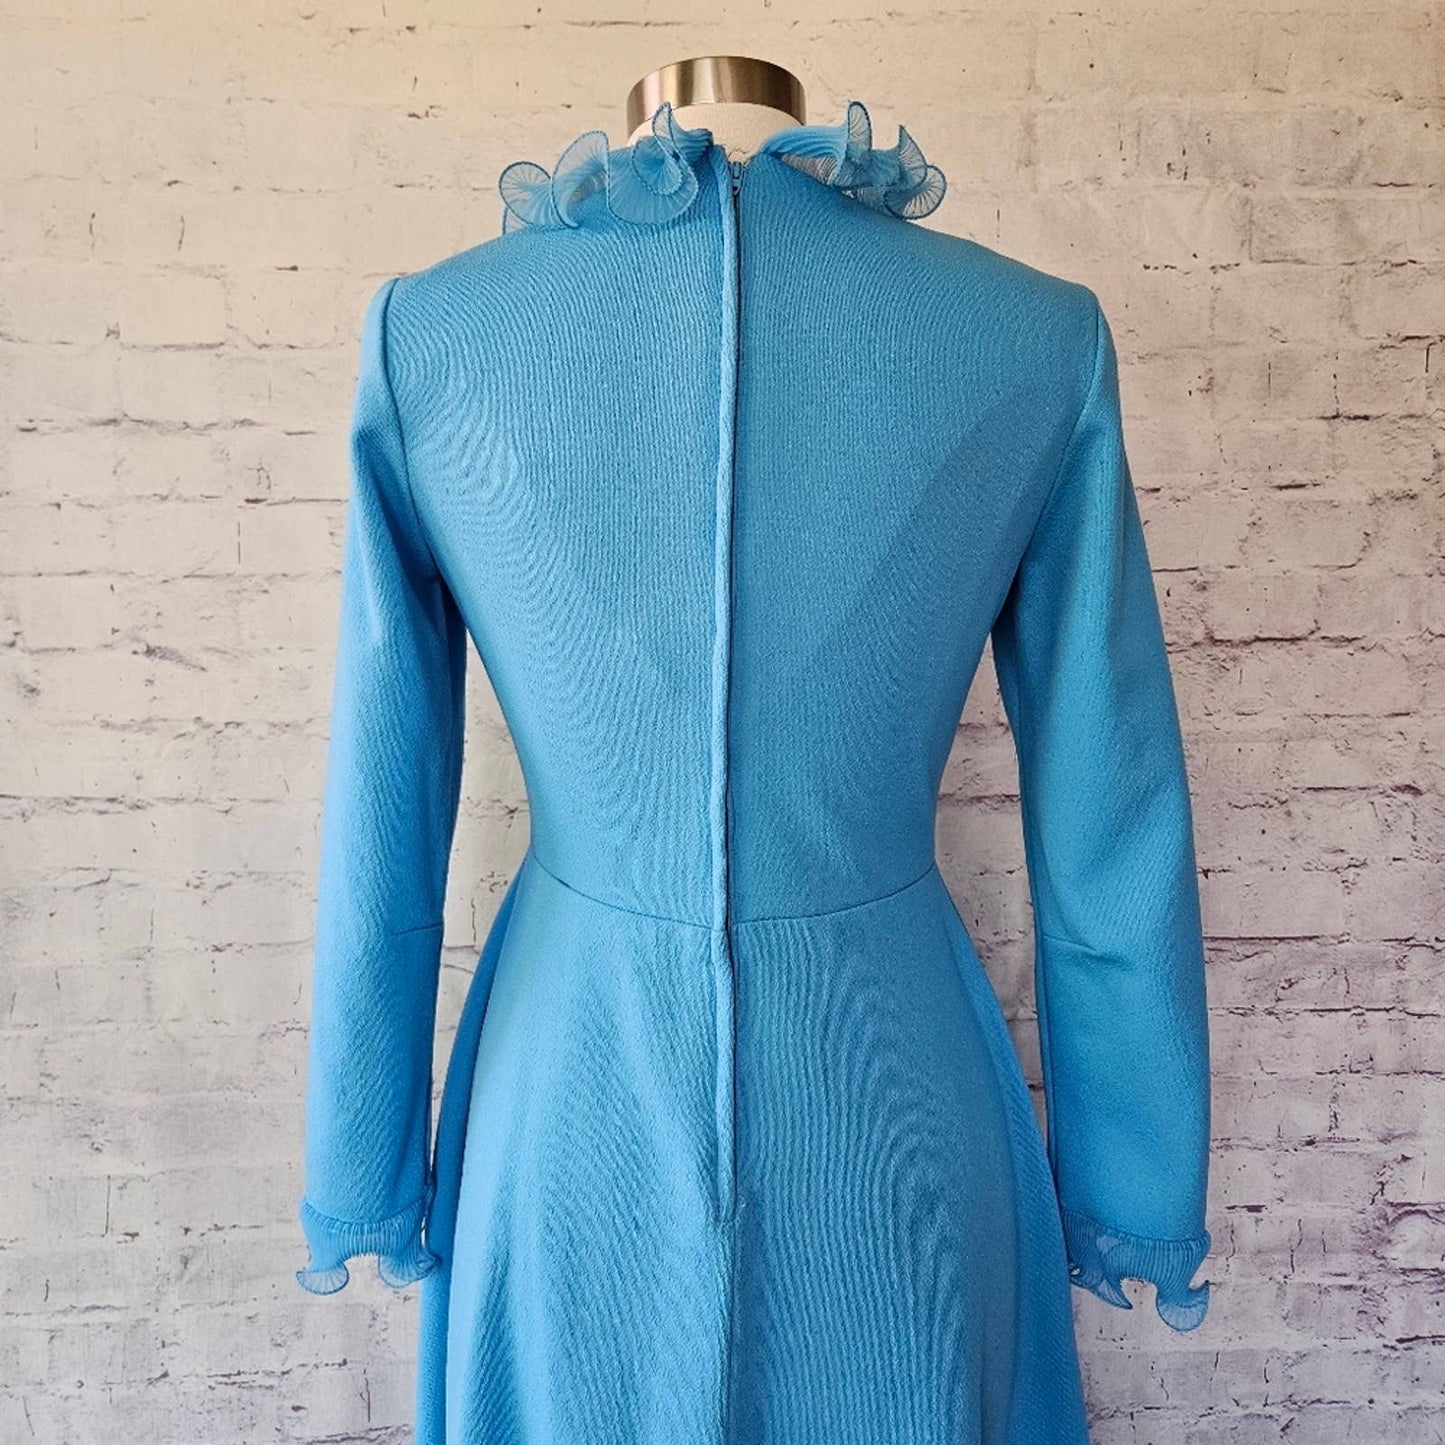 Vintage 70s Sky Blue Micropleat Ruffle Long Sleeve Maxi Dress ILGWU Made in USA